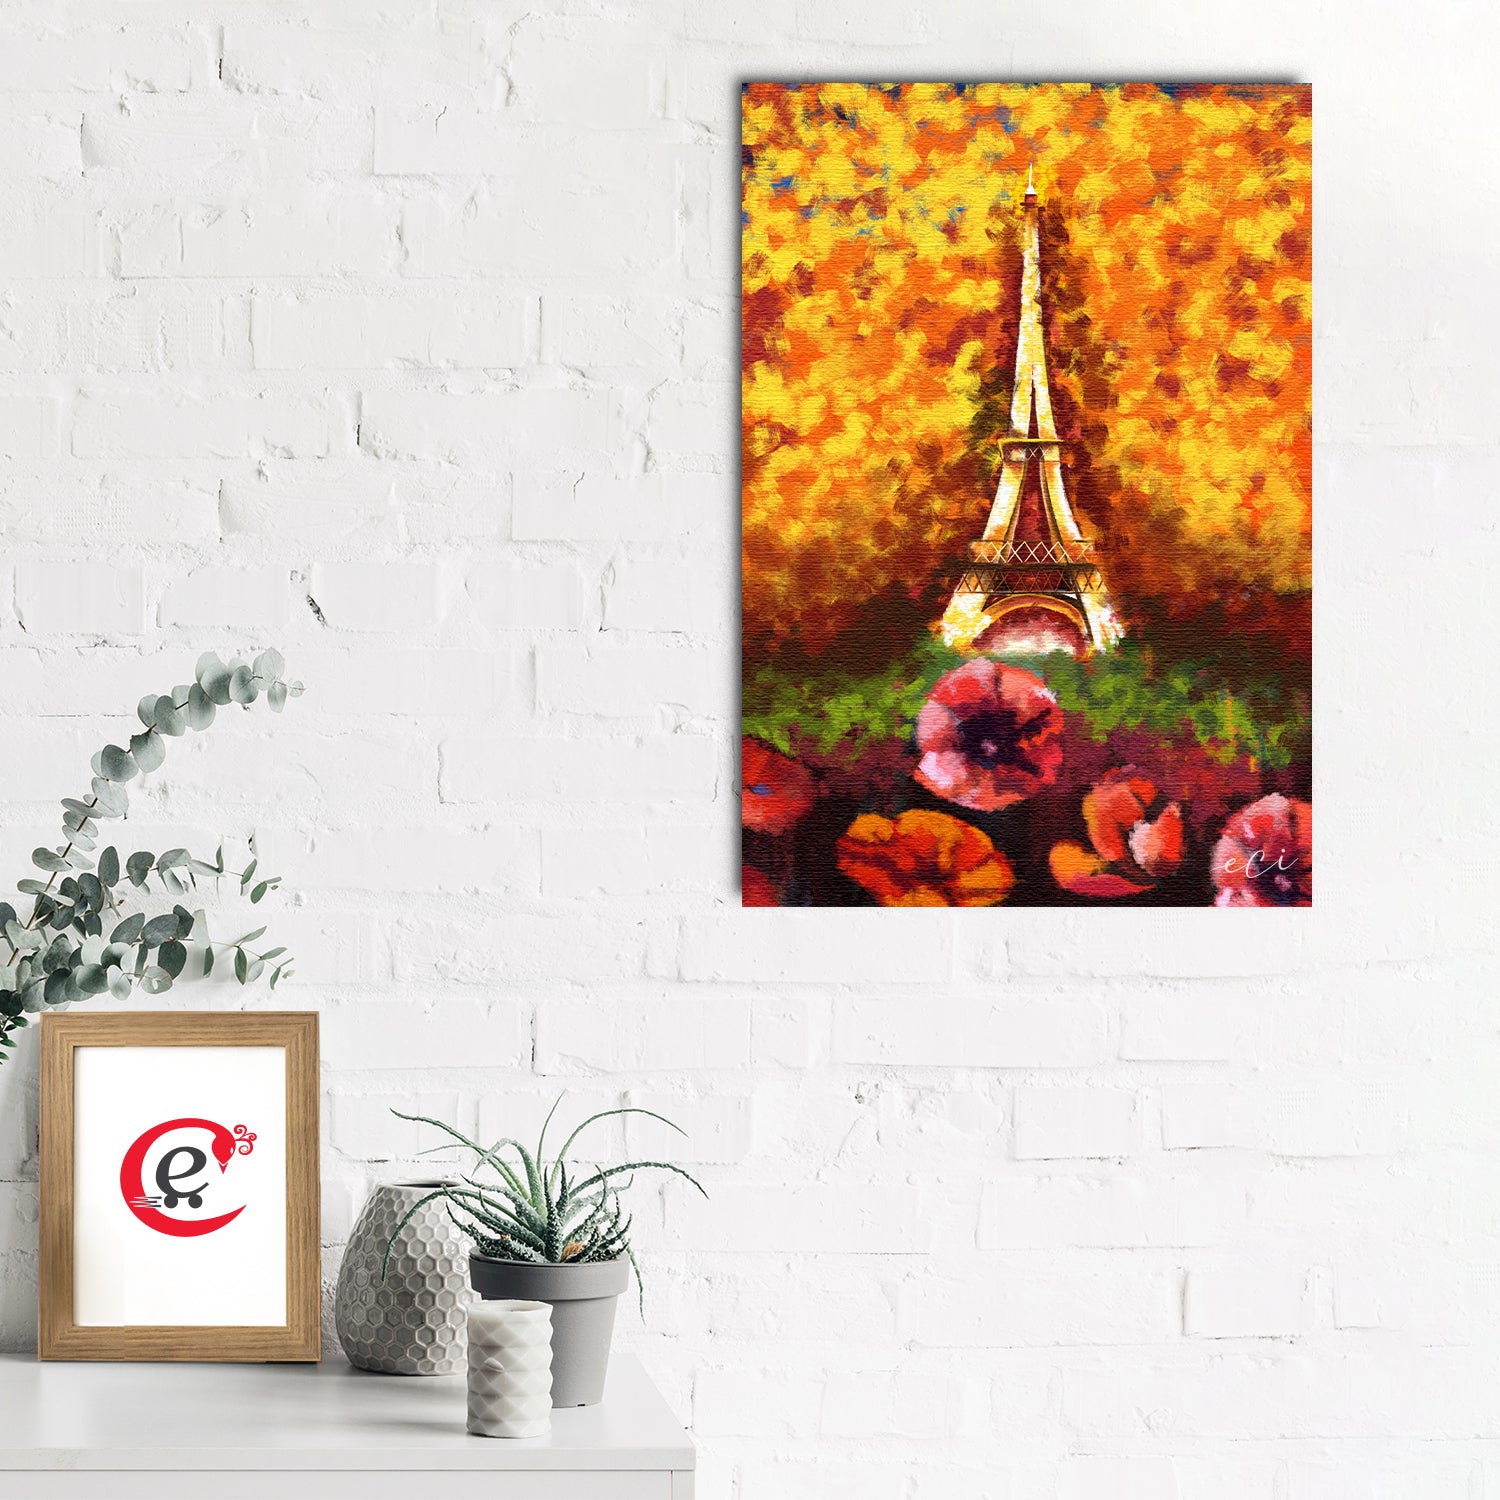 Paris Eiffel Tower View In Autumn Season Digital Printed Canvas Wall Painting 1